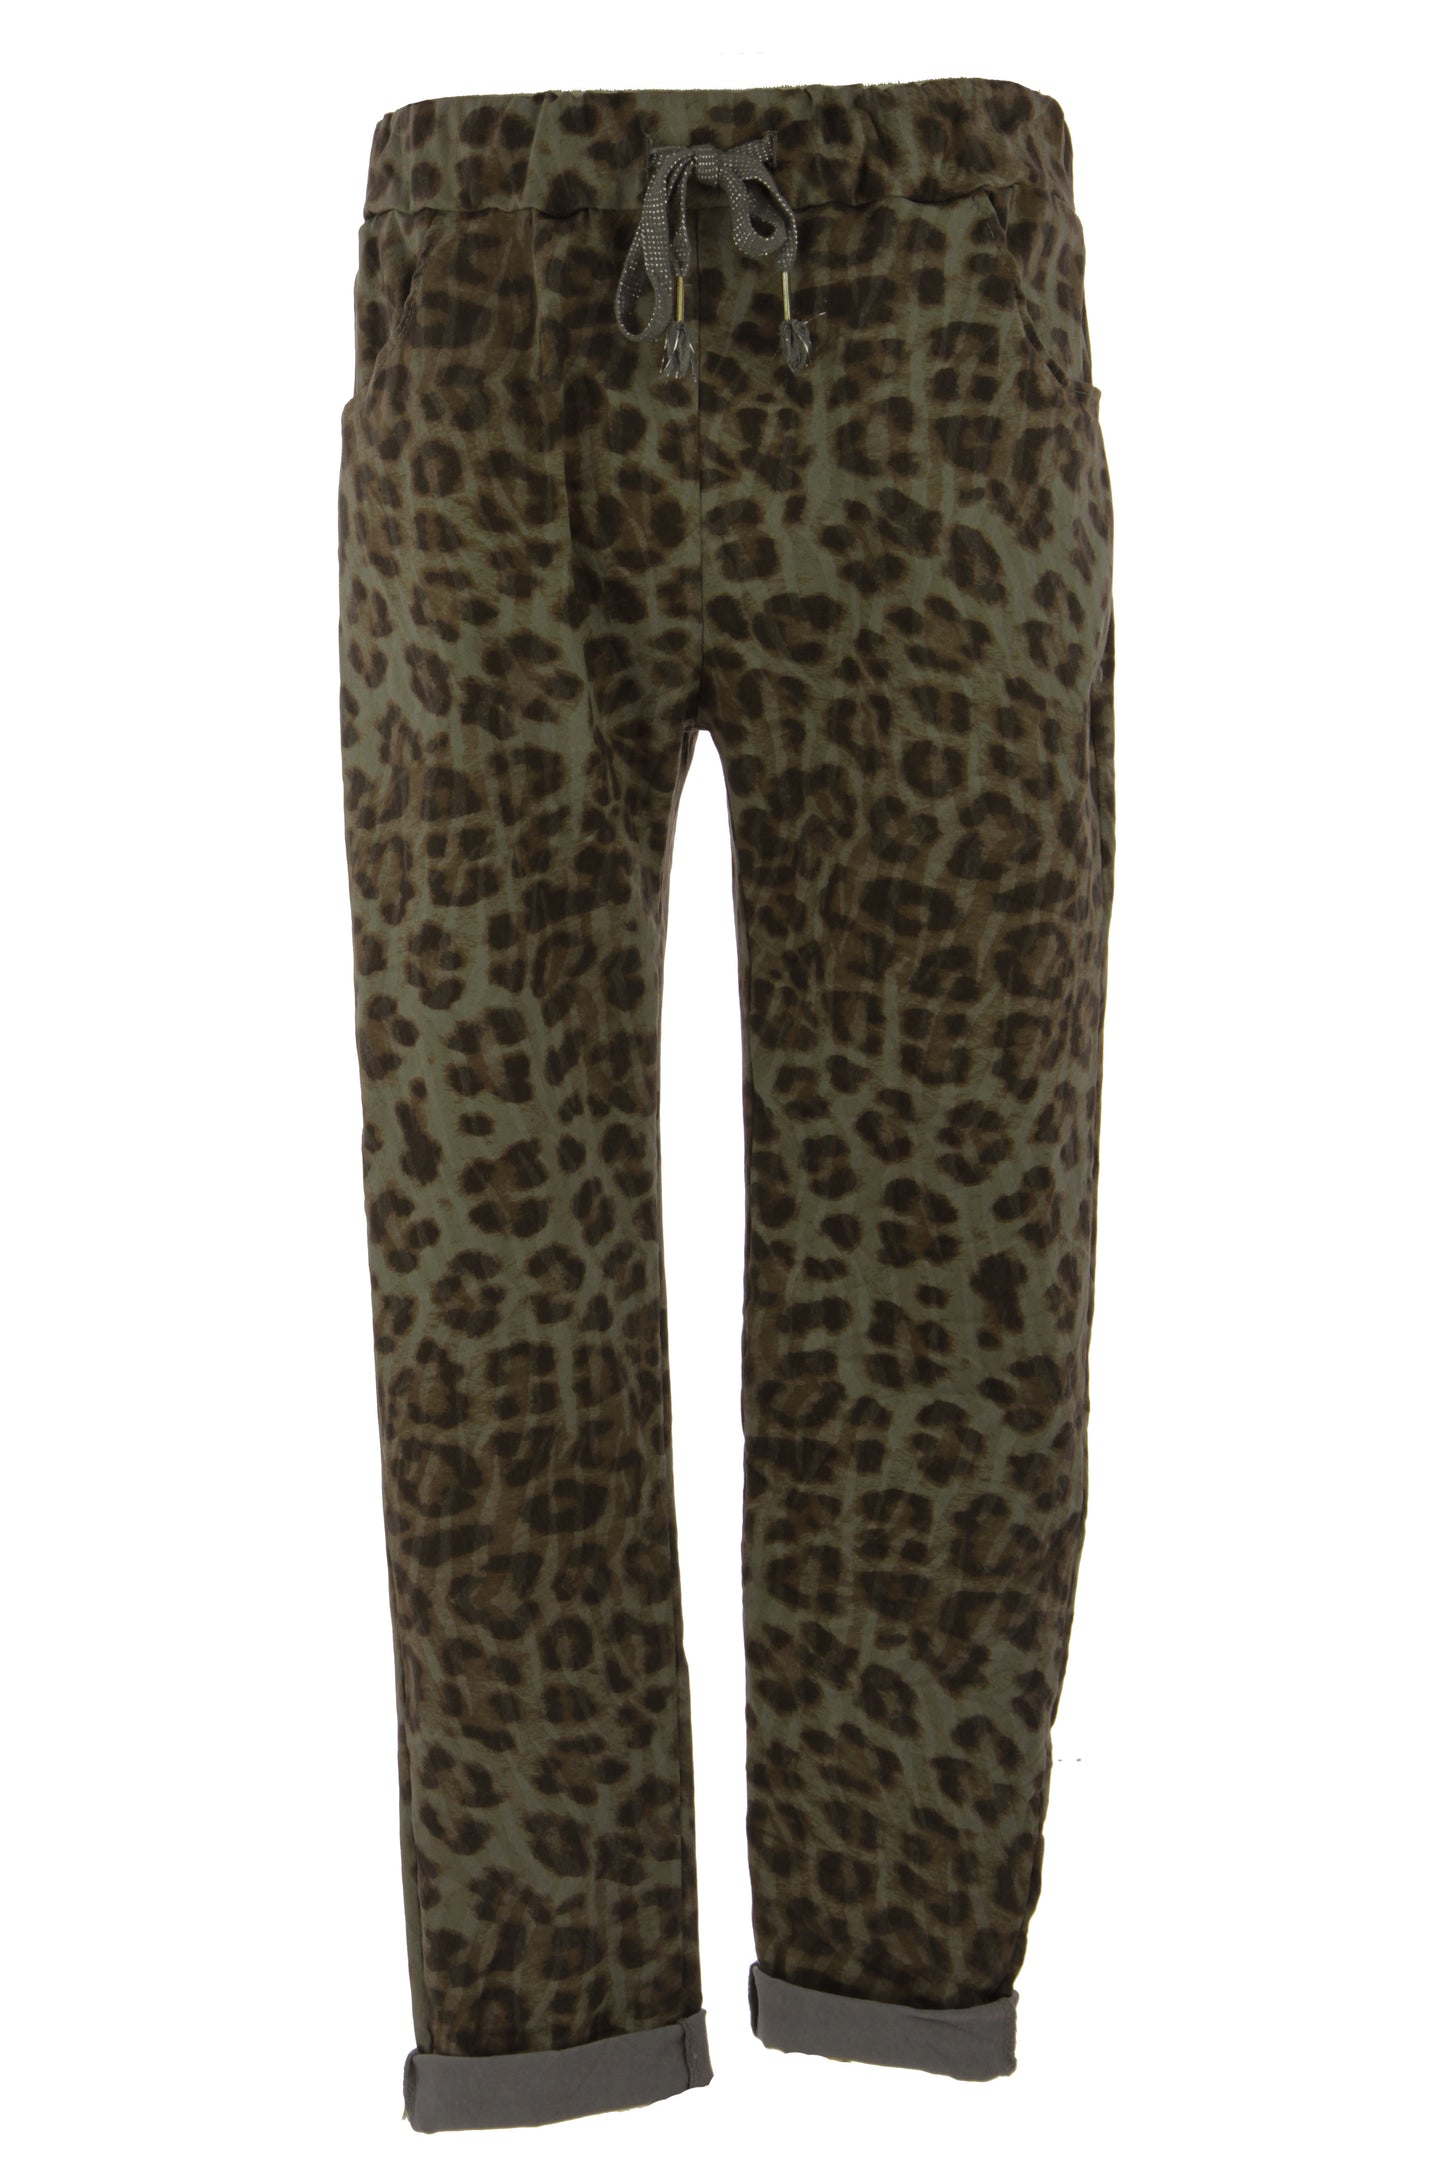 Leopard Print Magic Trouser